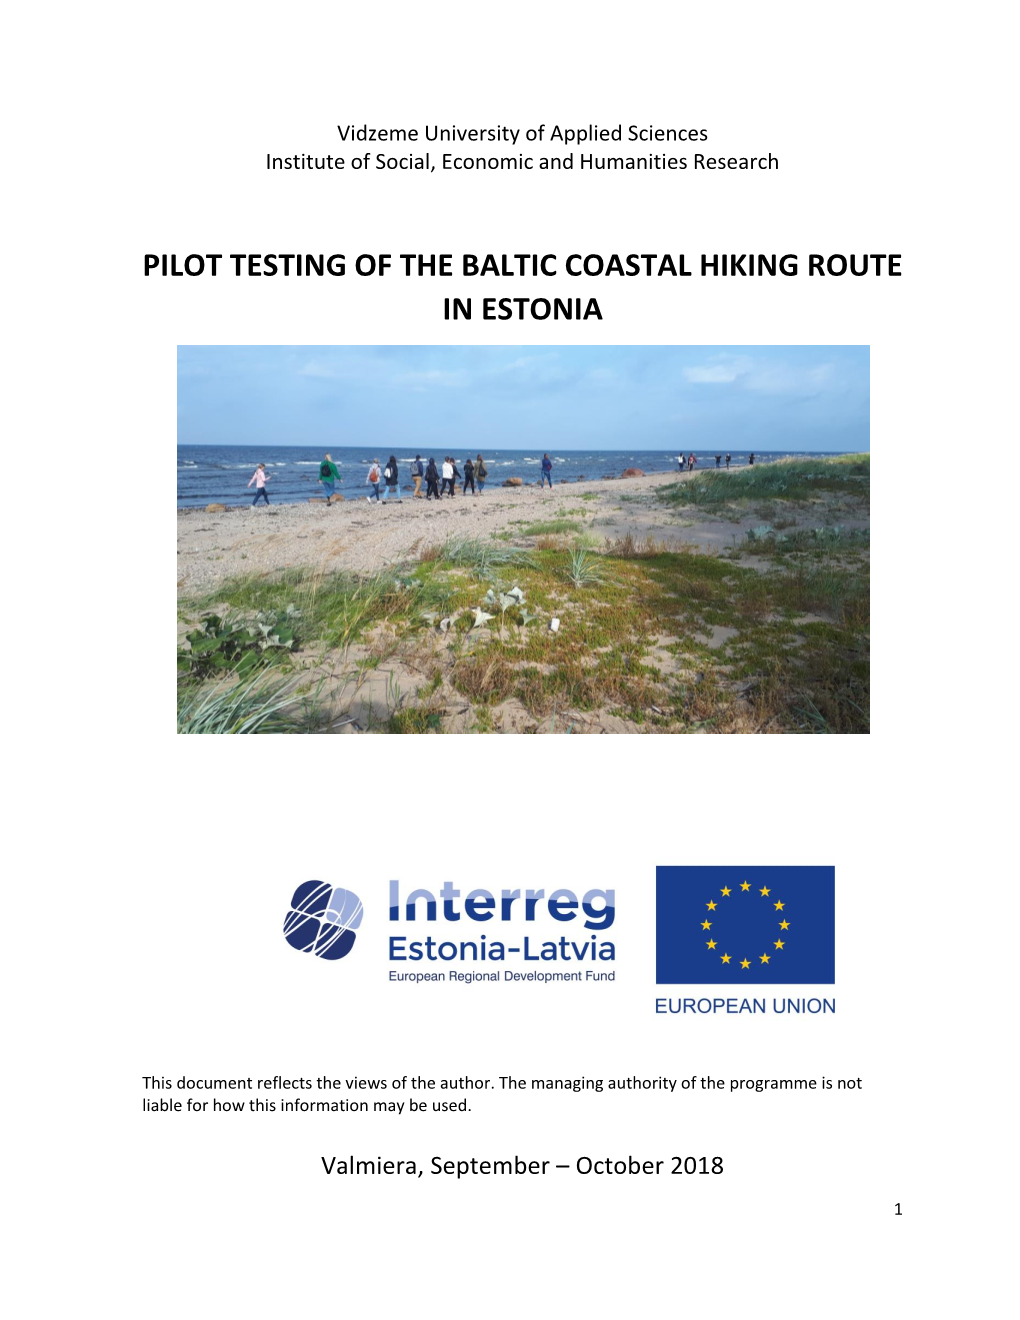 Pilot Testing of the Baltic Coastal Hiking Route in Estonia